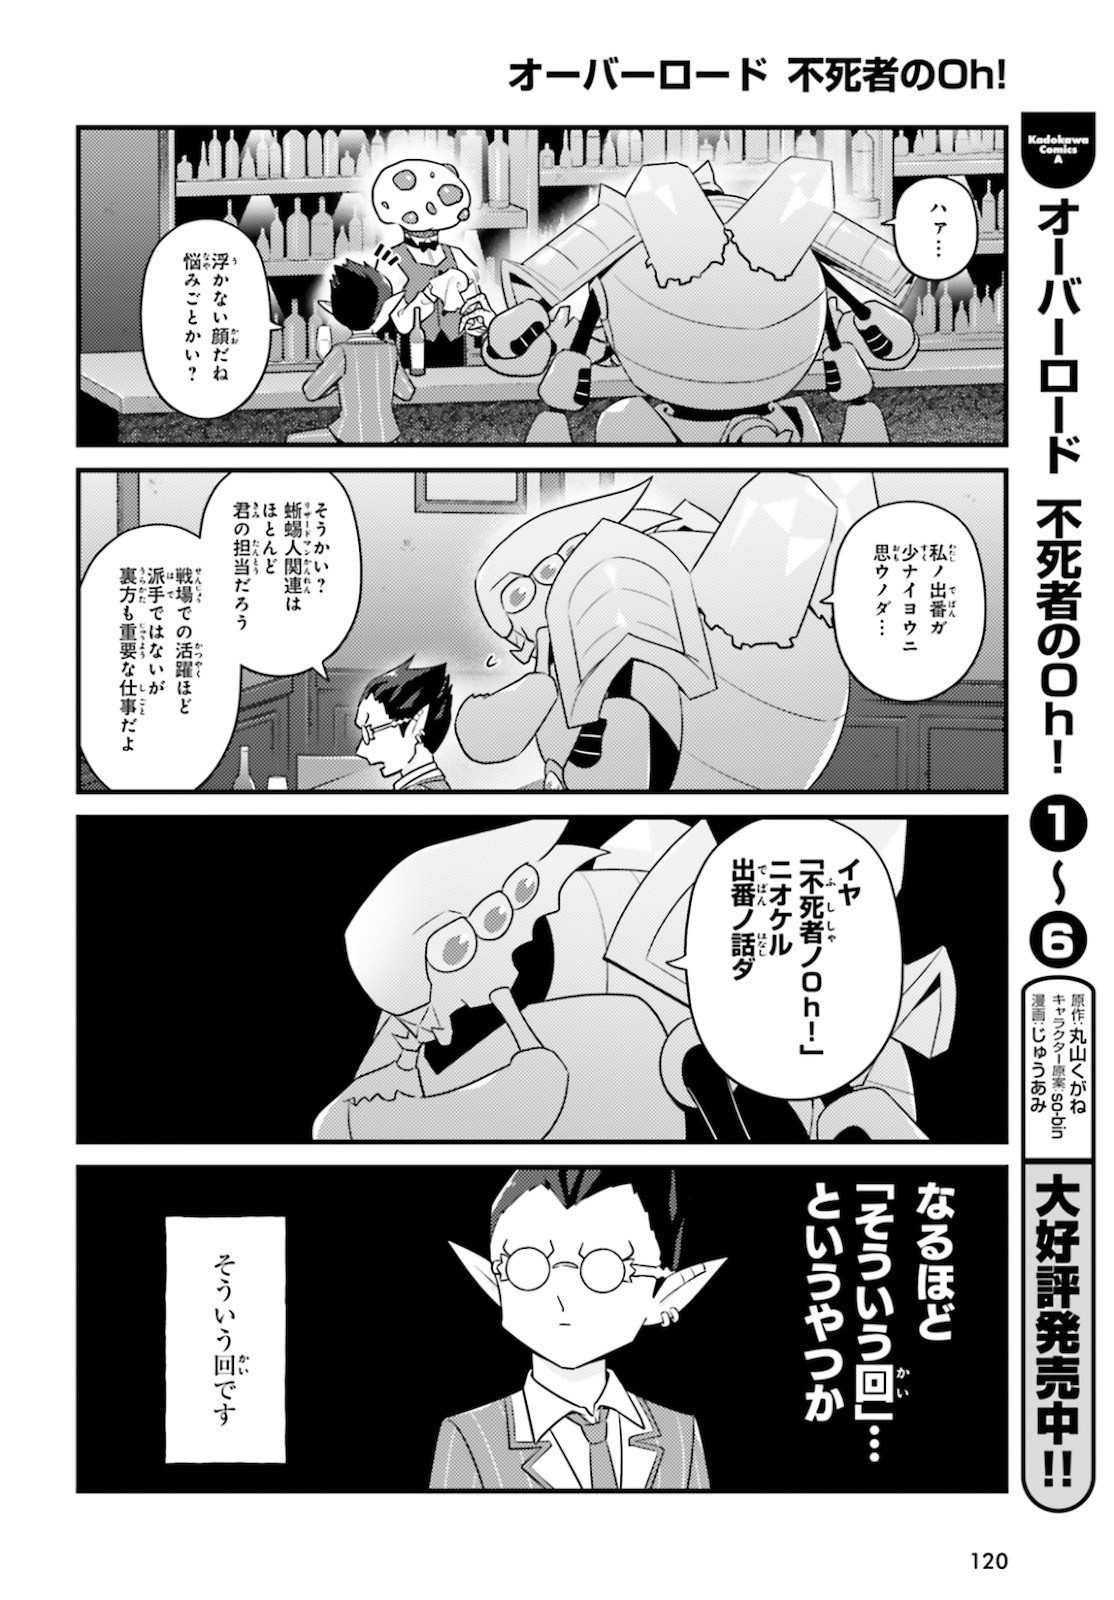 Overlord-Fushisha-no-Oh - Chapter 42 - Page 2